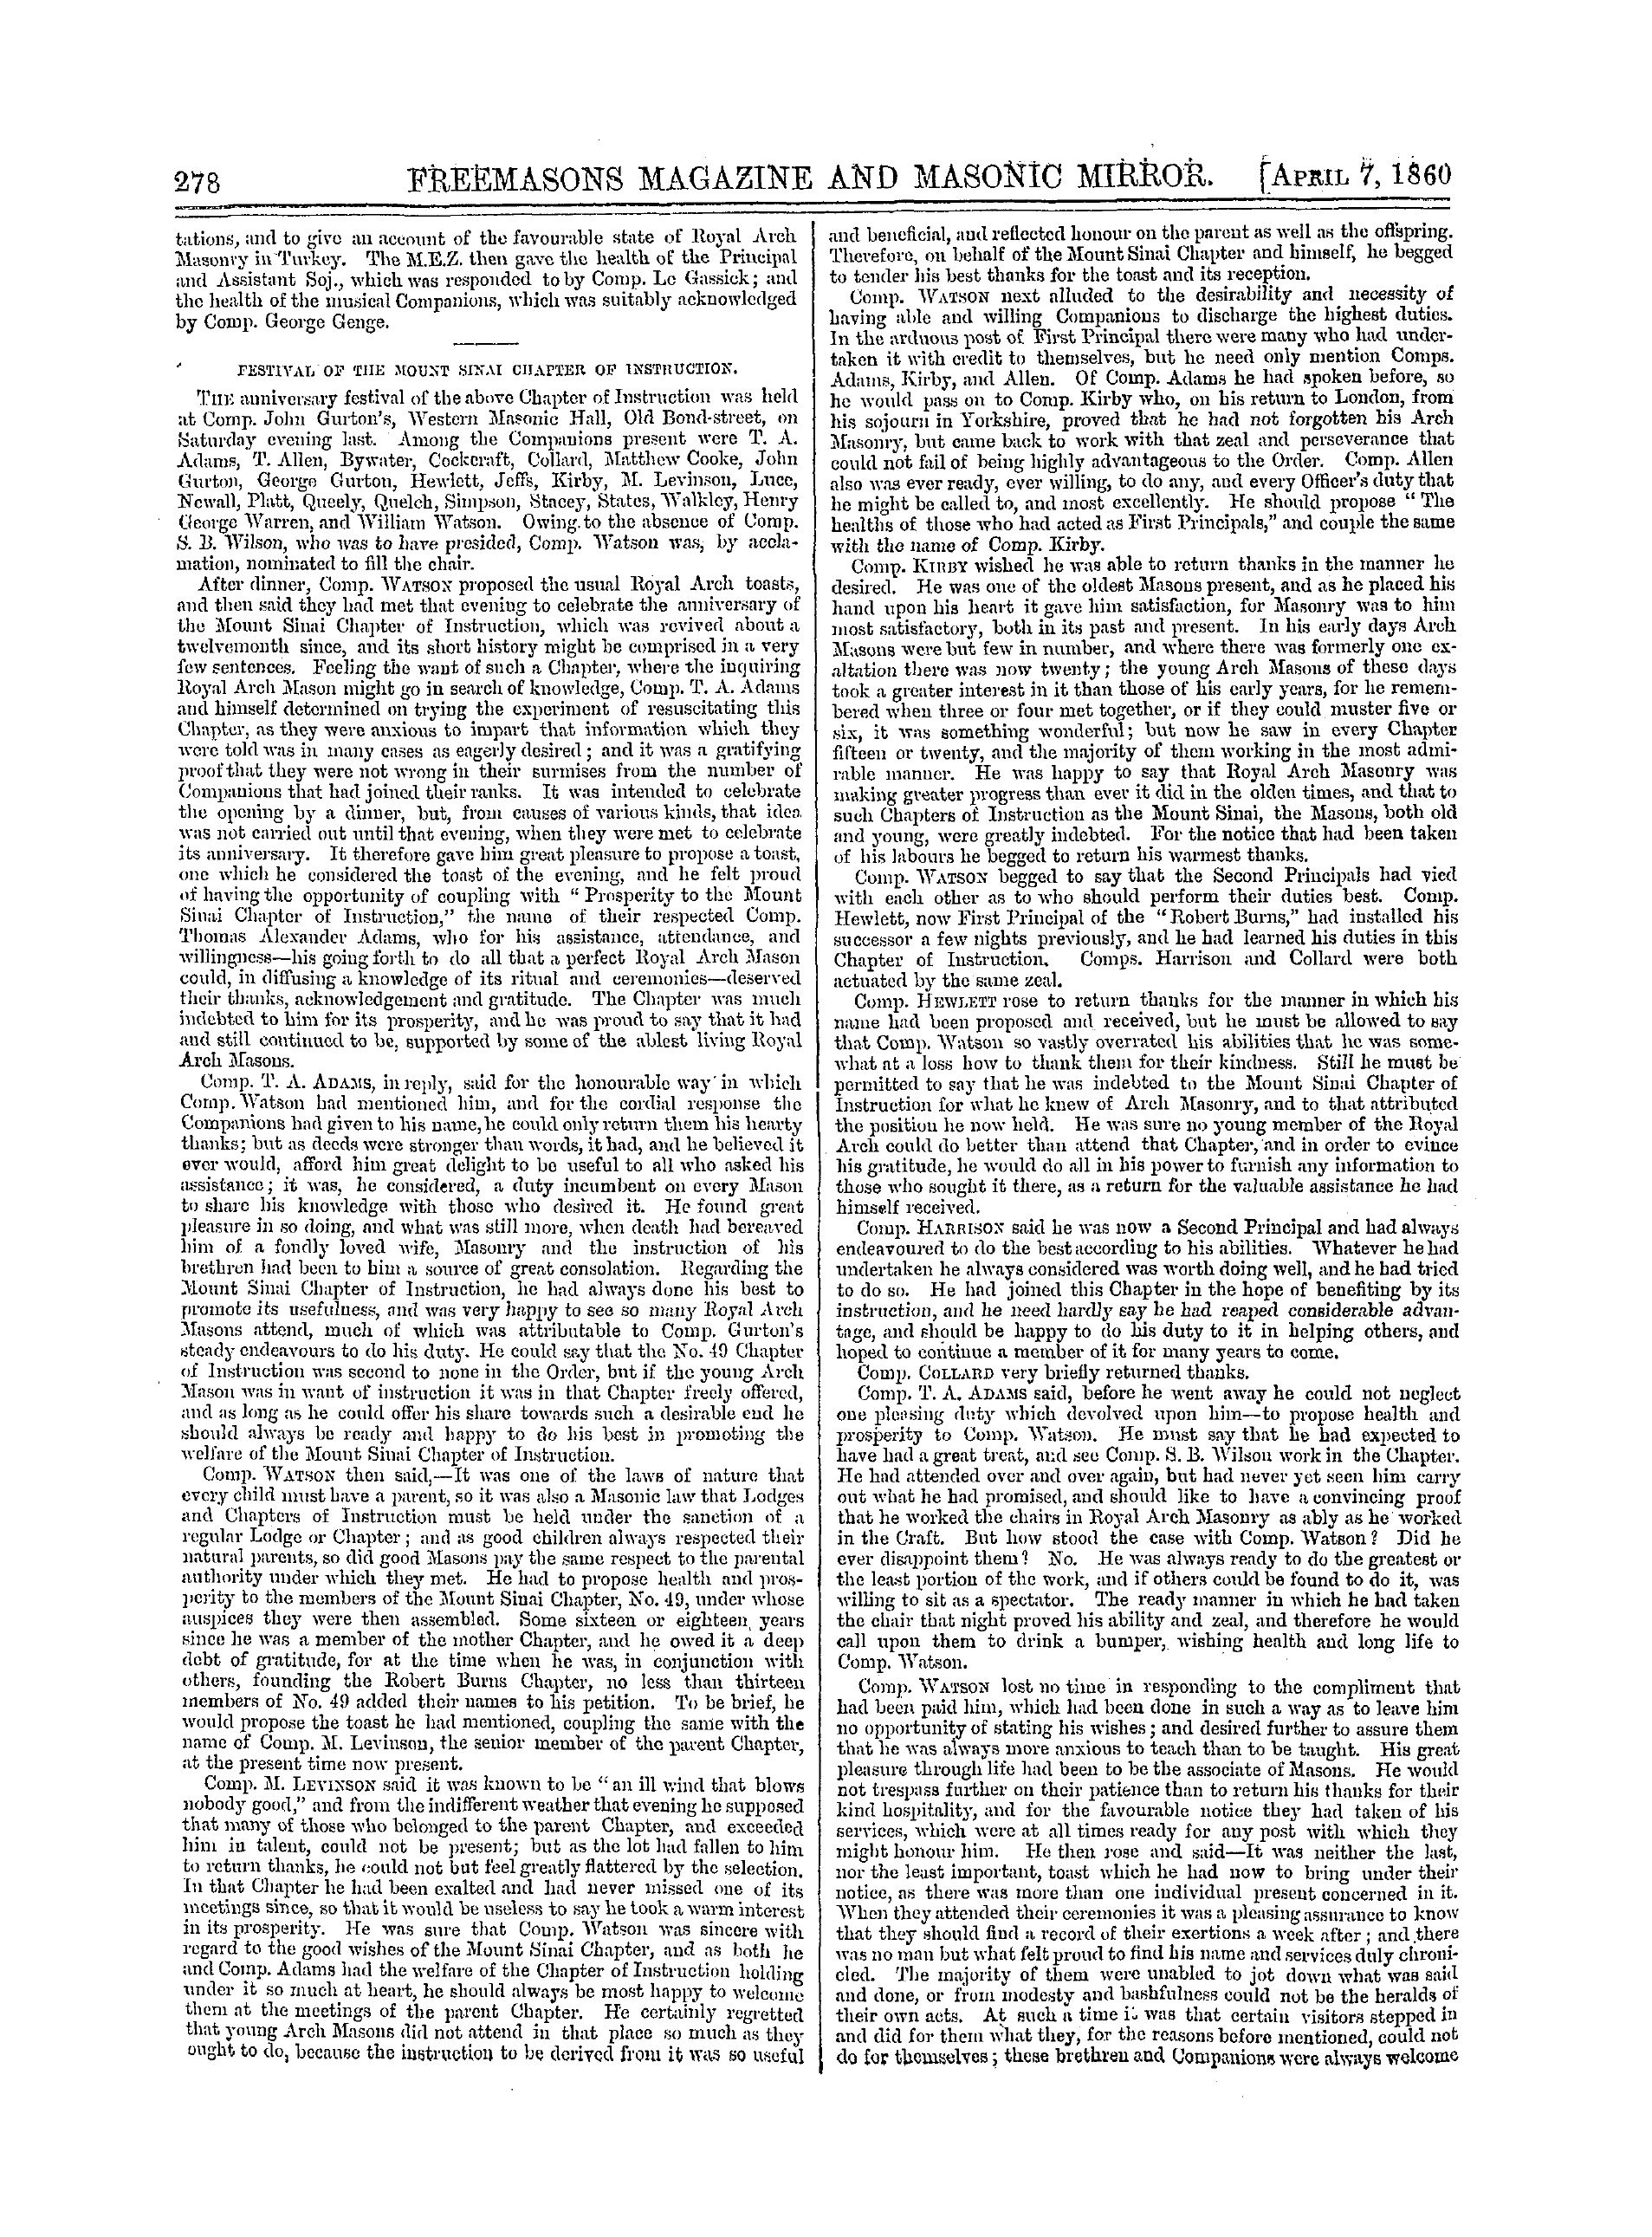 The Freemasons' Monthly Magazine: 1860-04-07 - Royal Arch.